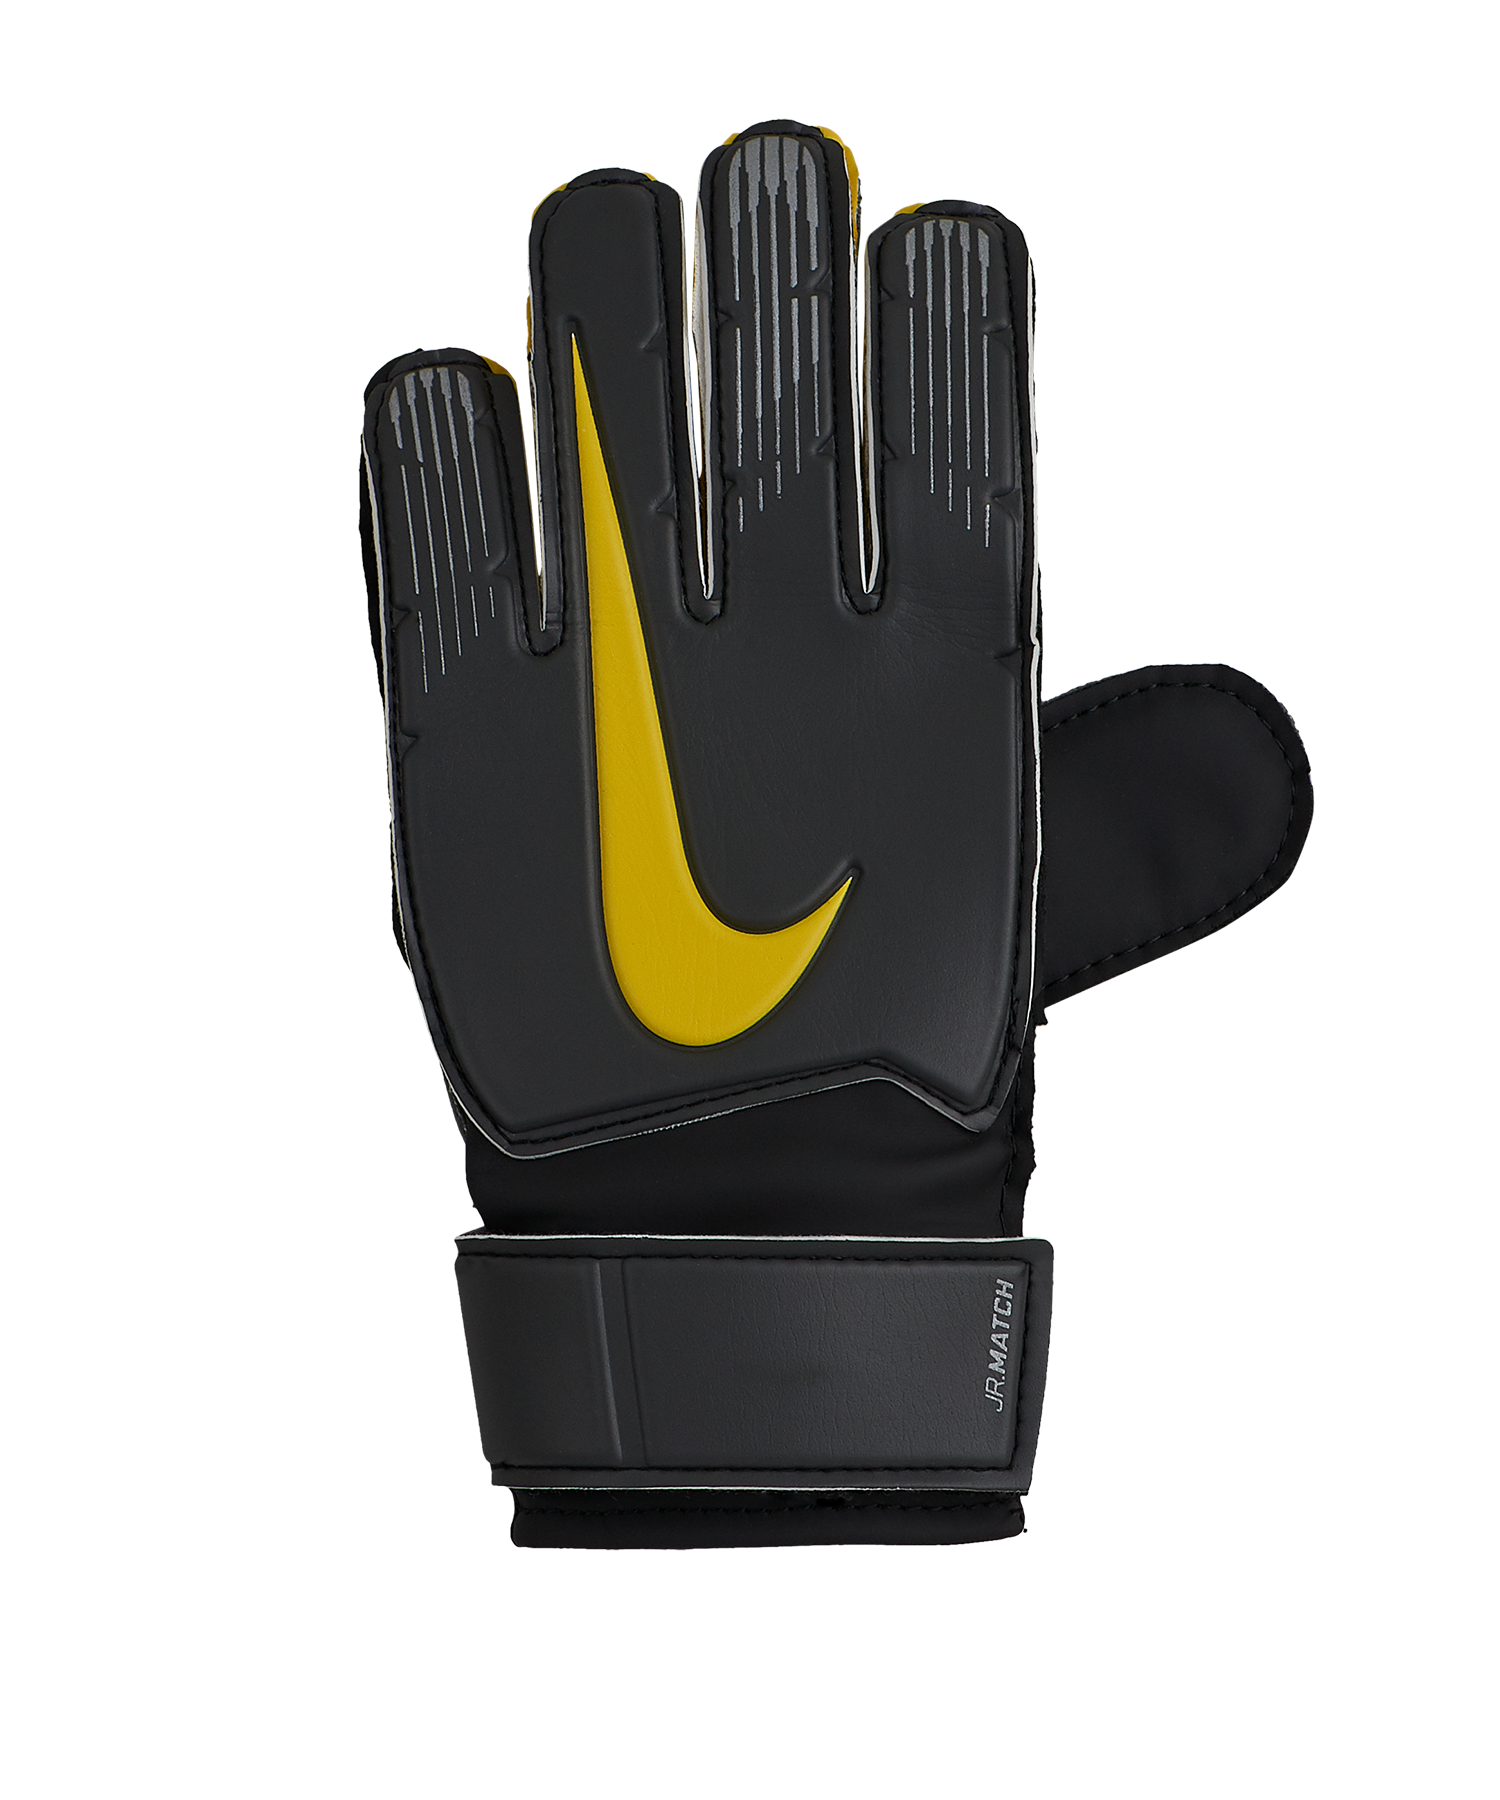 Nike Kids' Match Goalkeeper Football Gloves